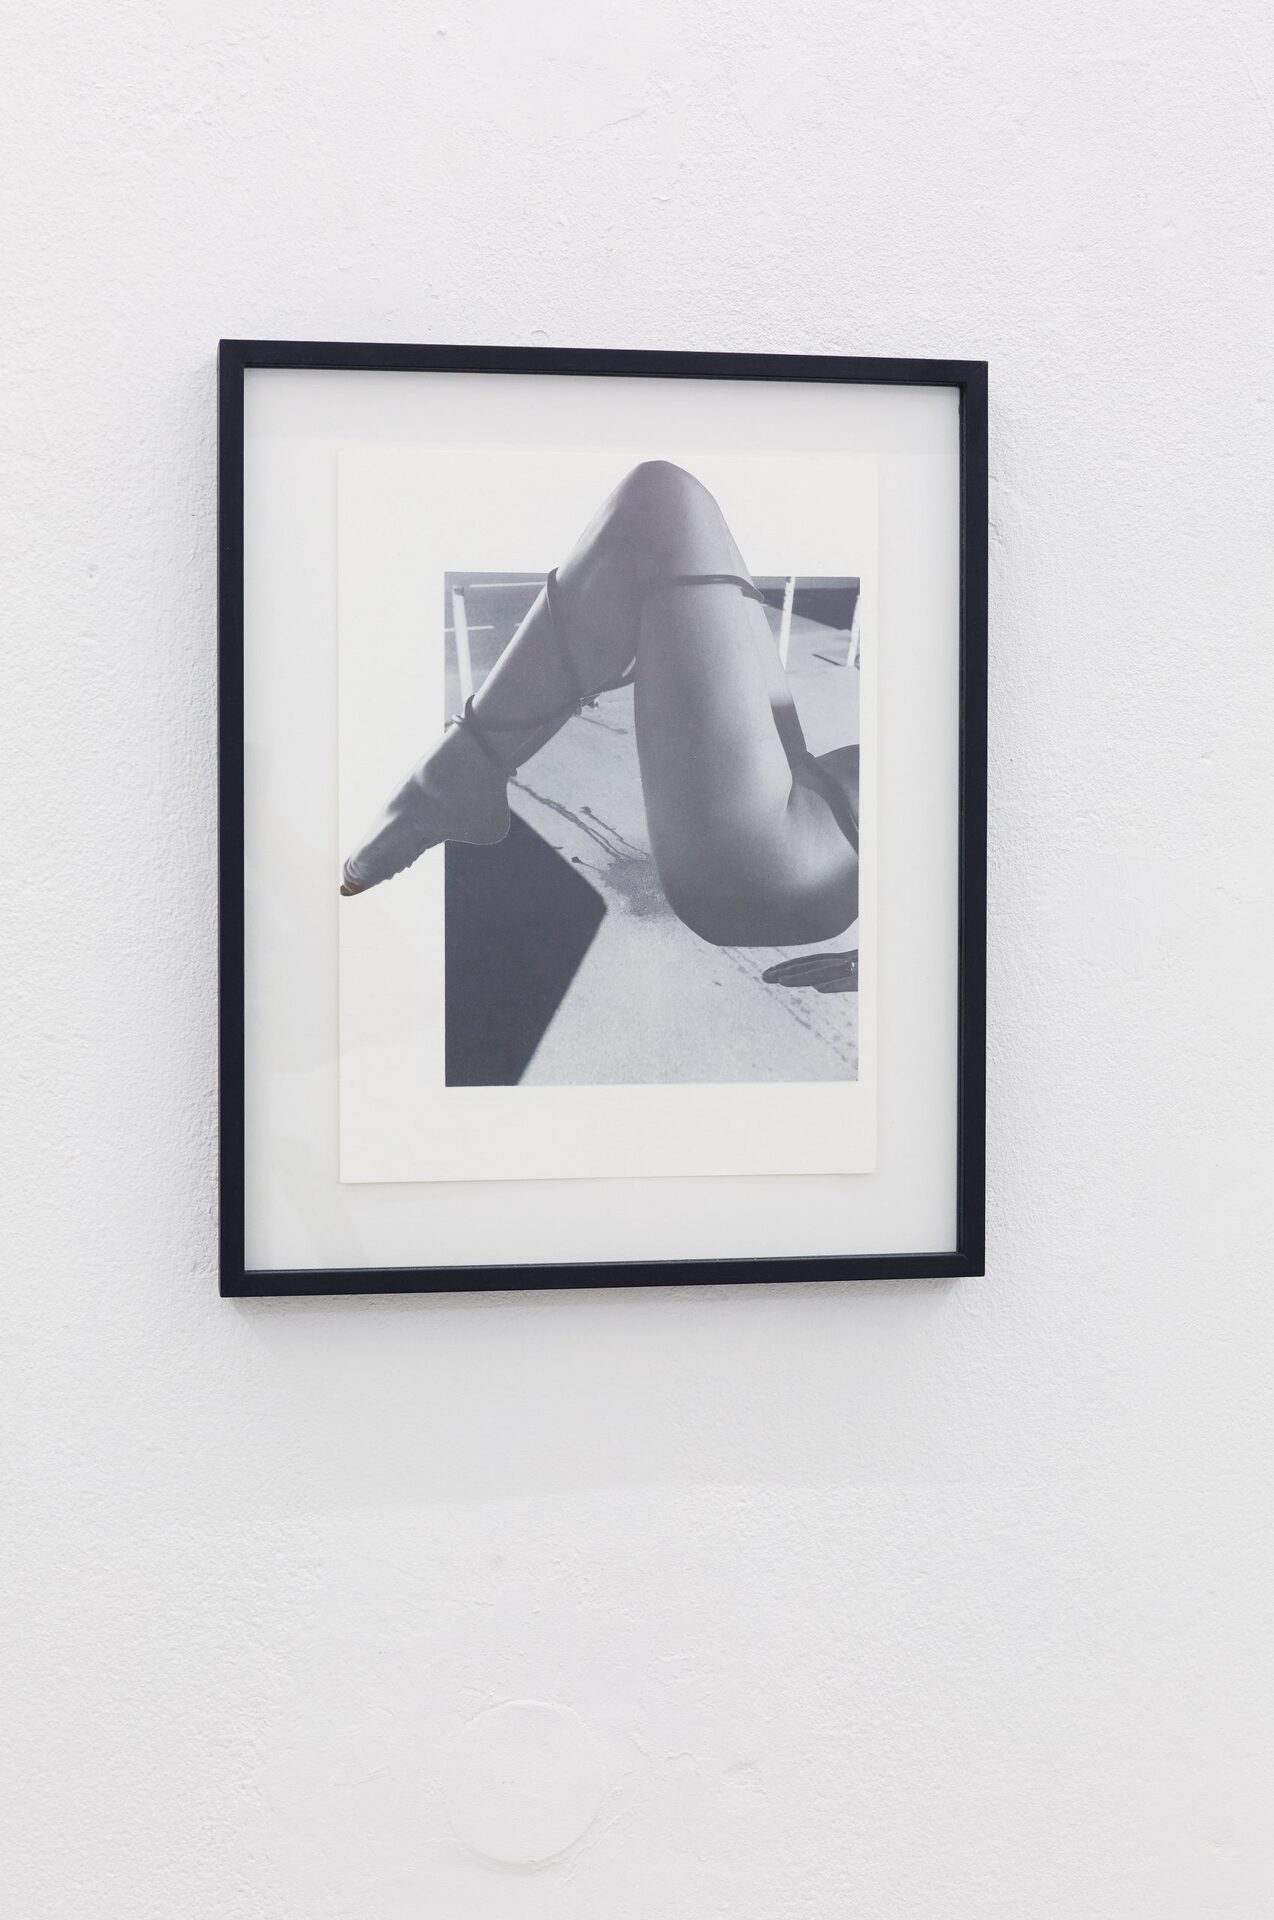 Pola Mika Lara Kapuste, Untitled, 2017, Photo and cardboard, 35 x 22 cm